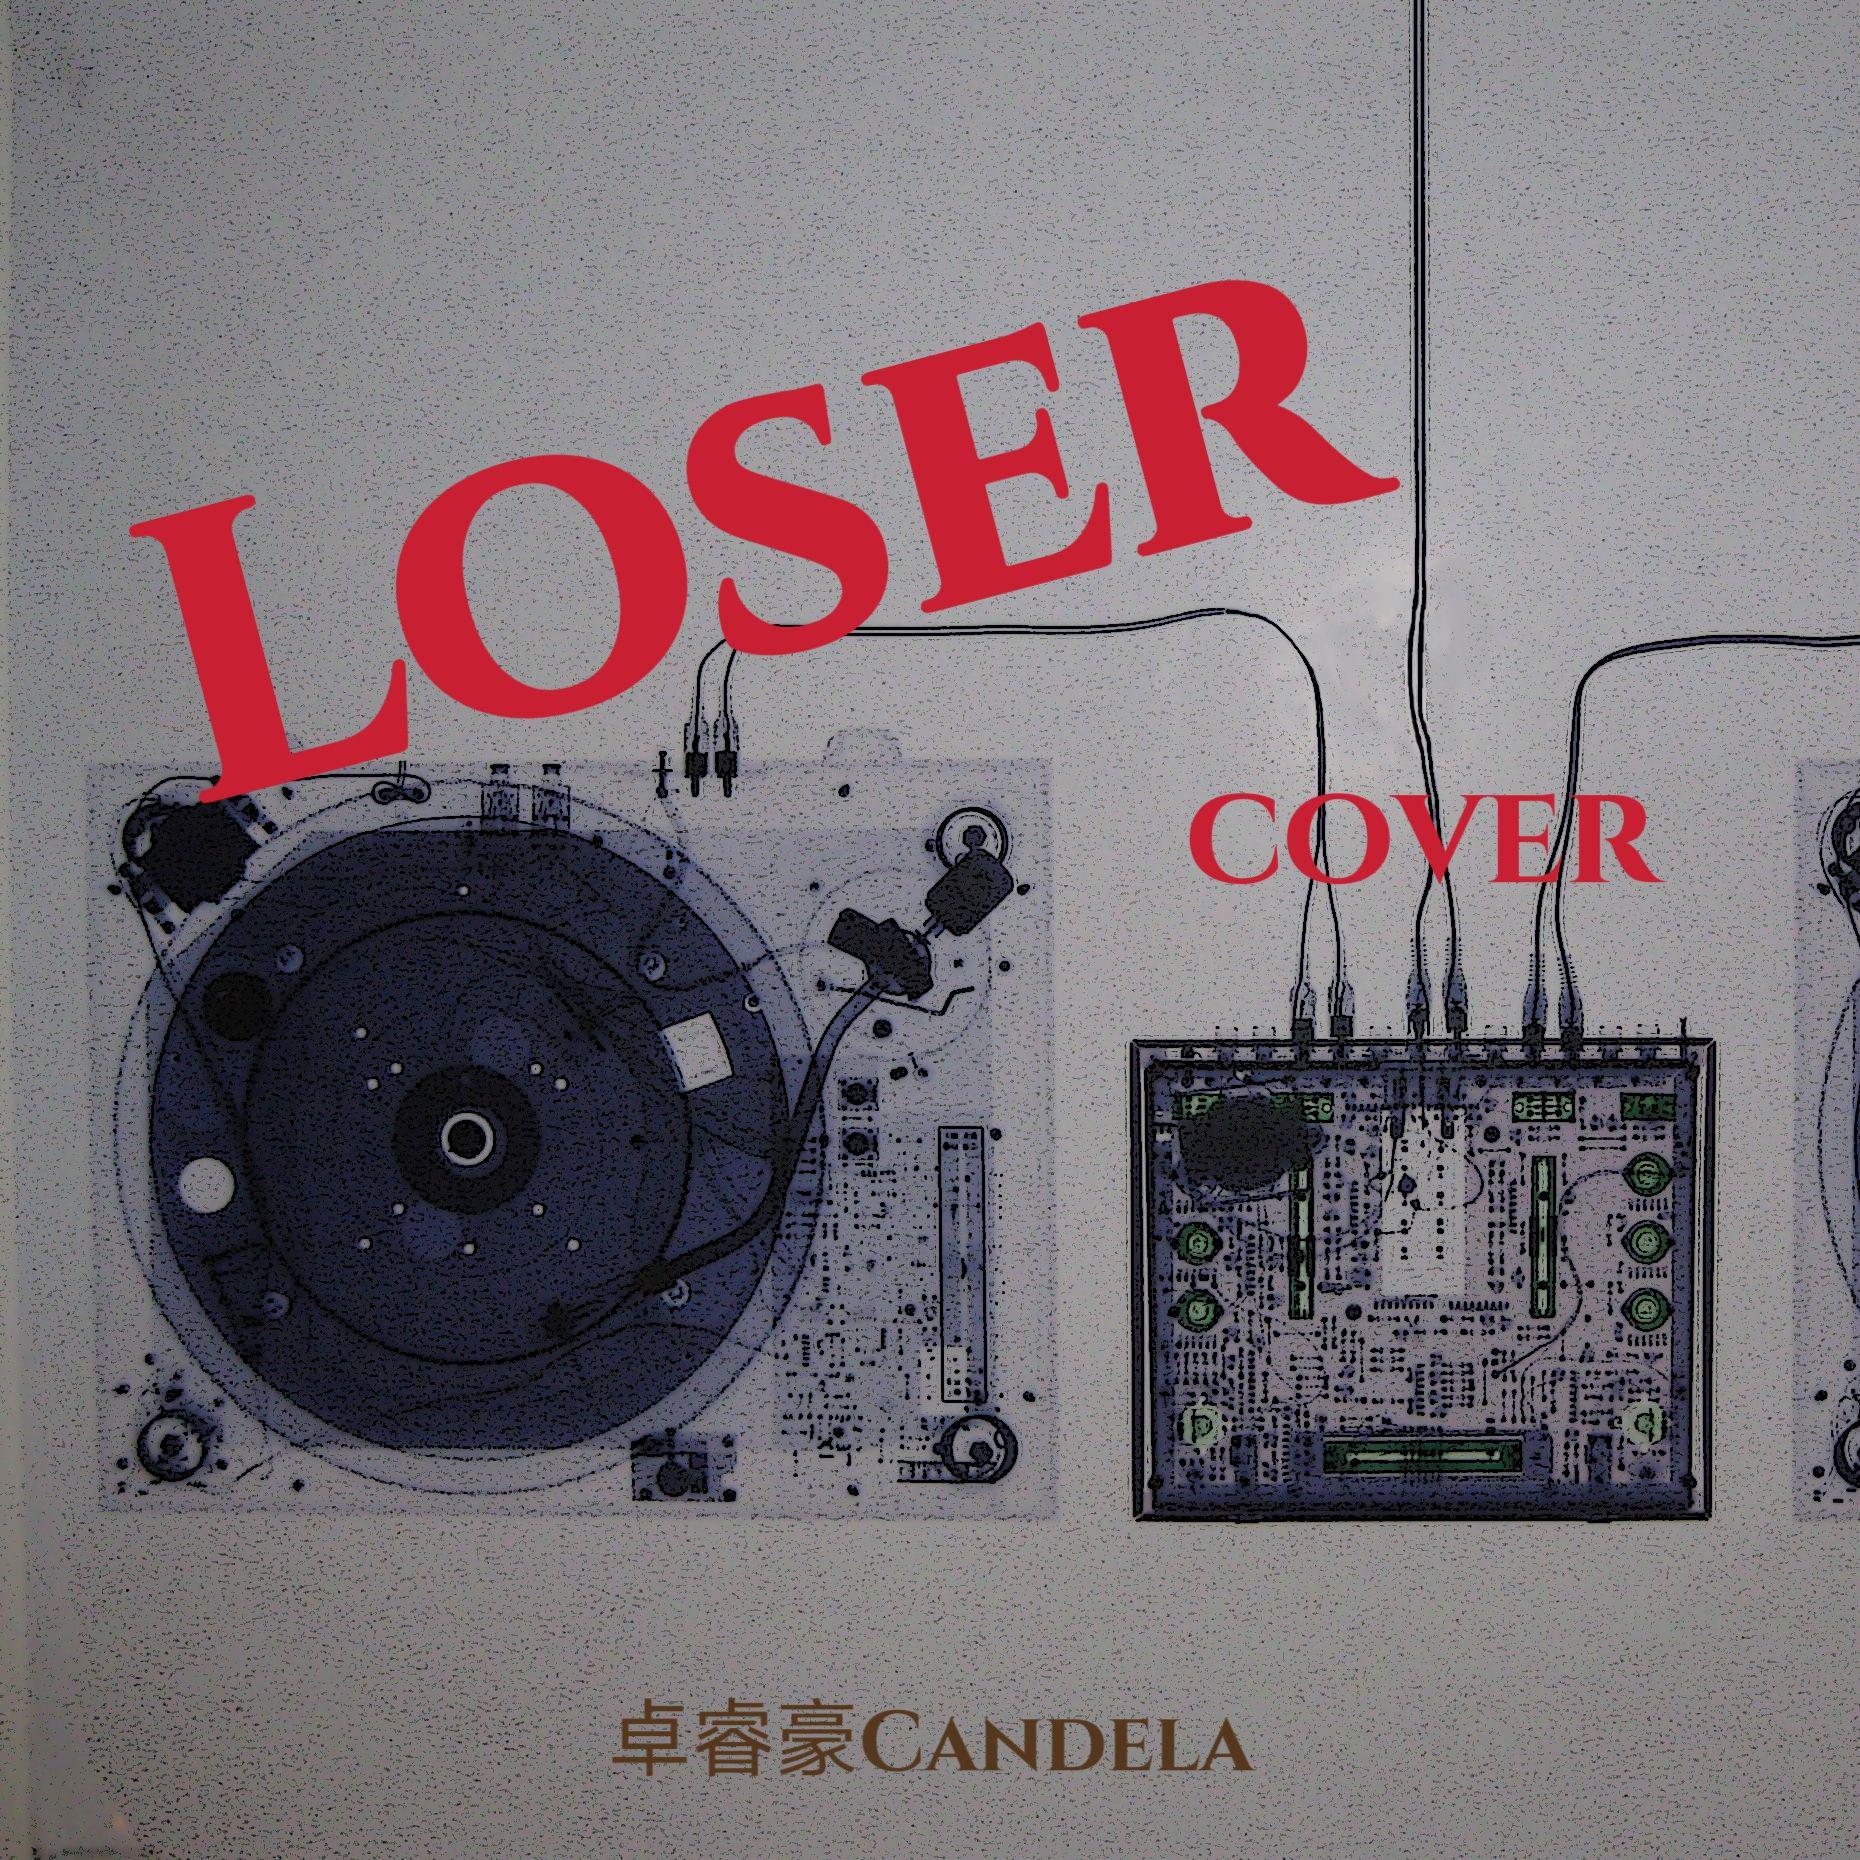 卓睿豪 - Loser